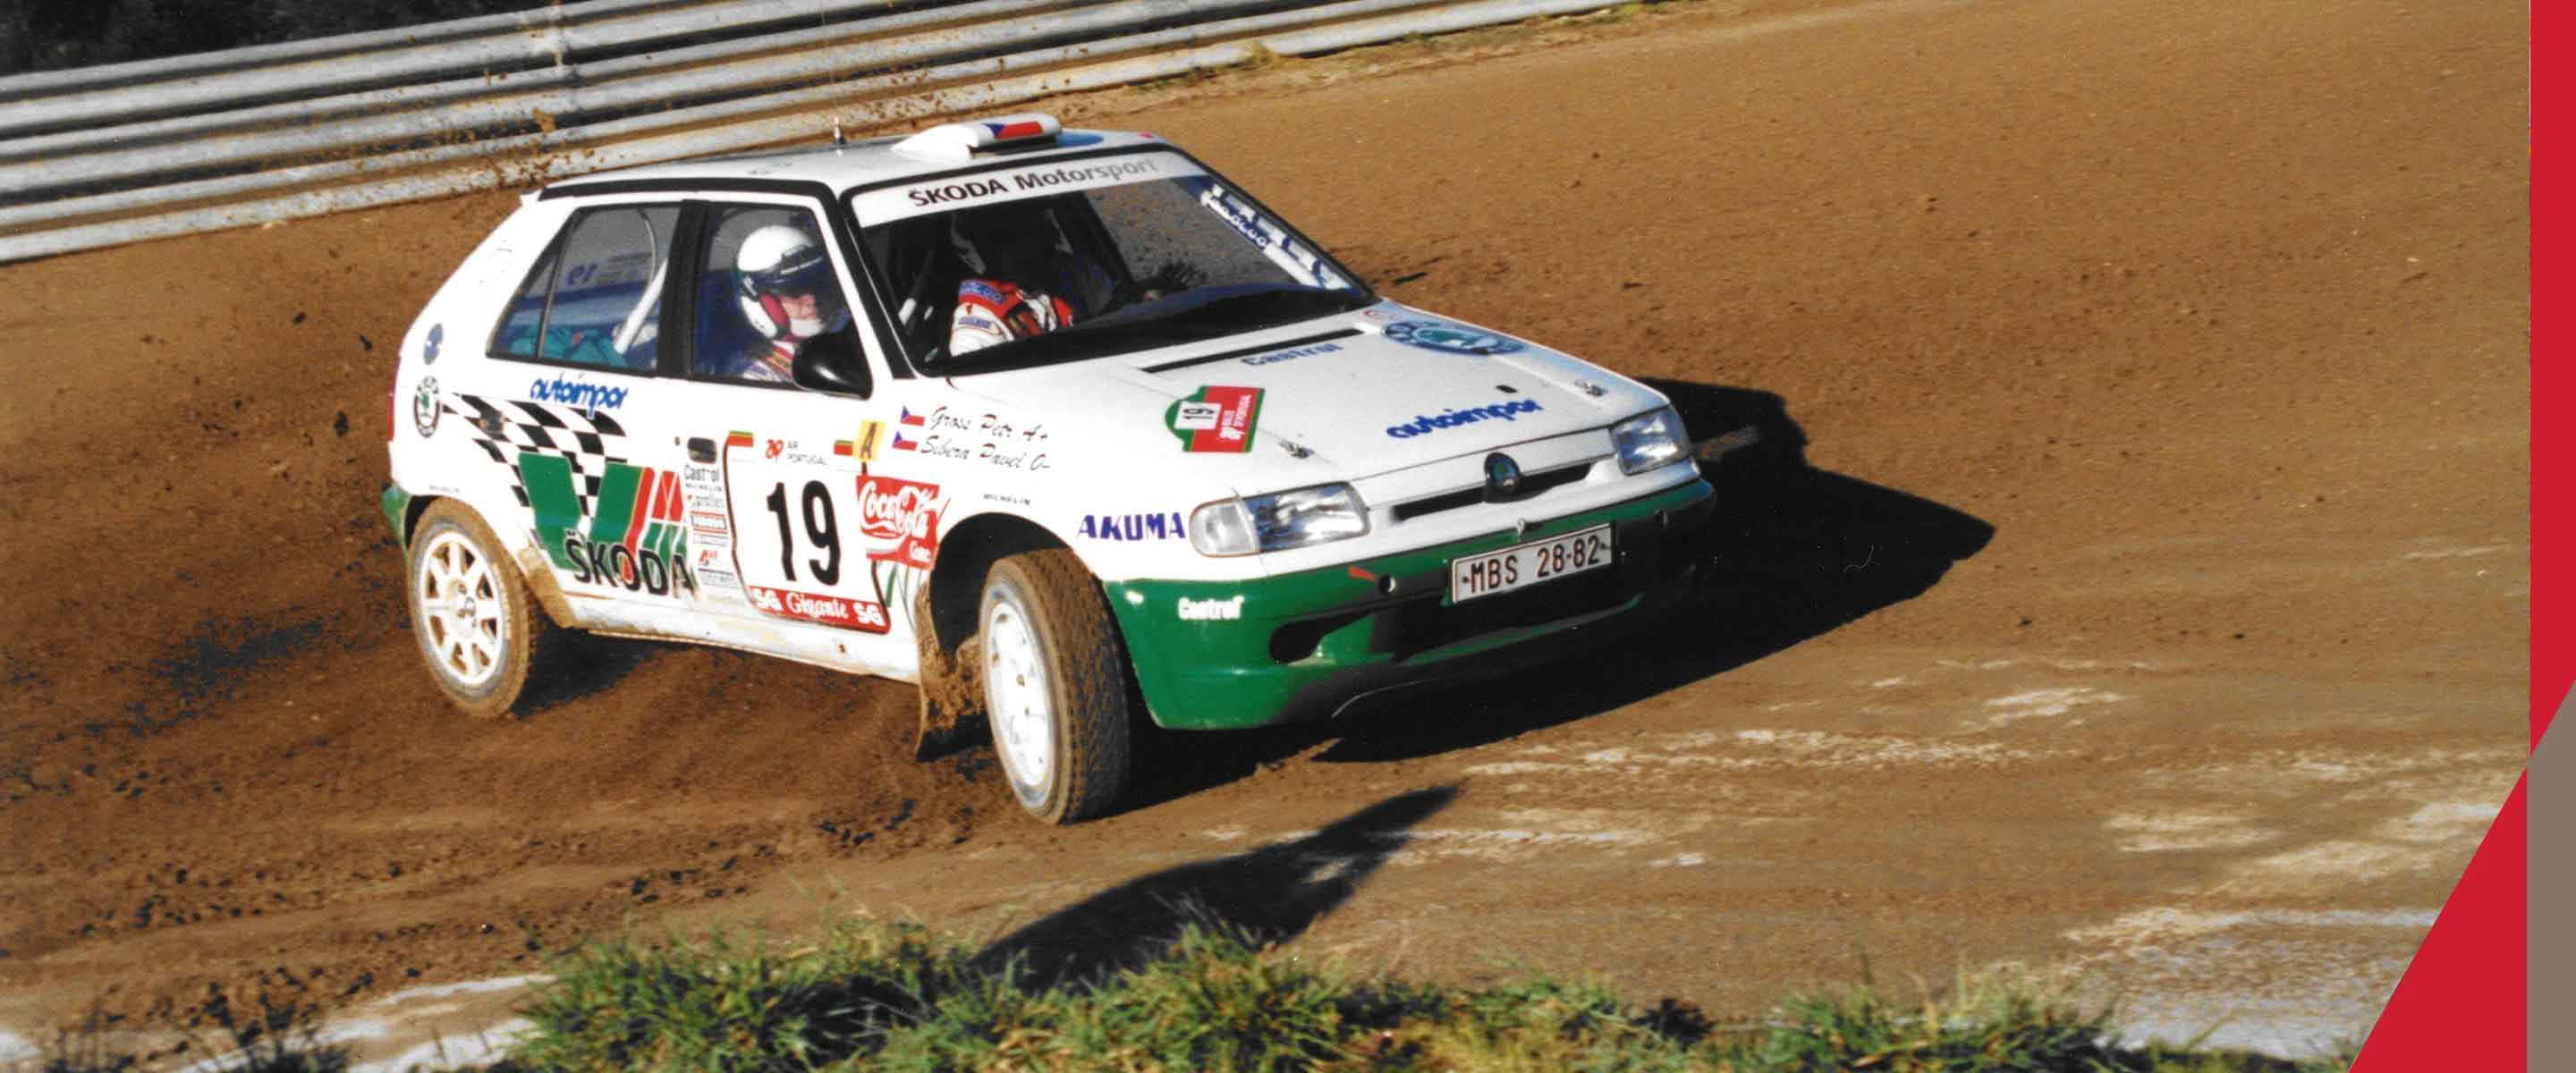 skoda-felicia-kit-car-1995-driften-met-voorwielaandrijving-header1